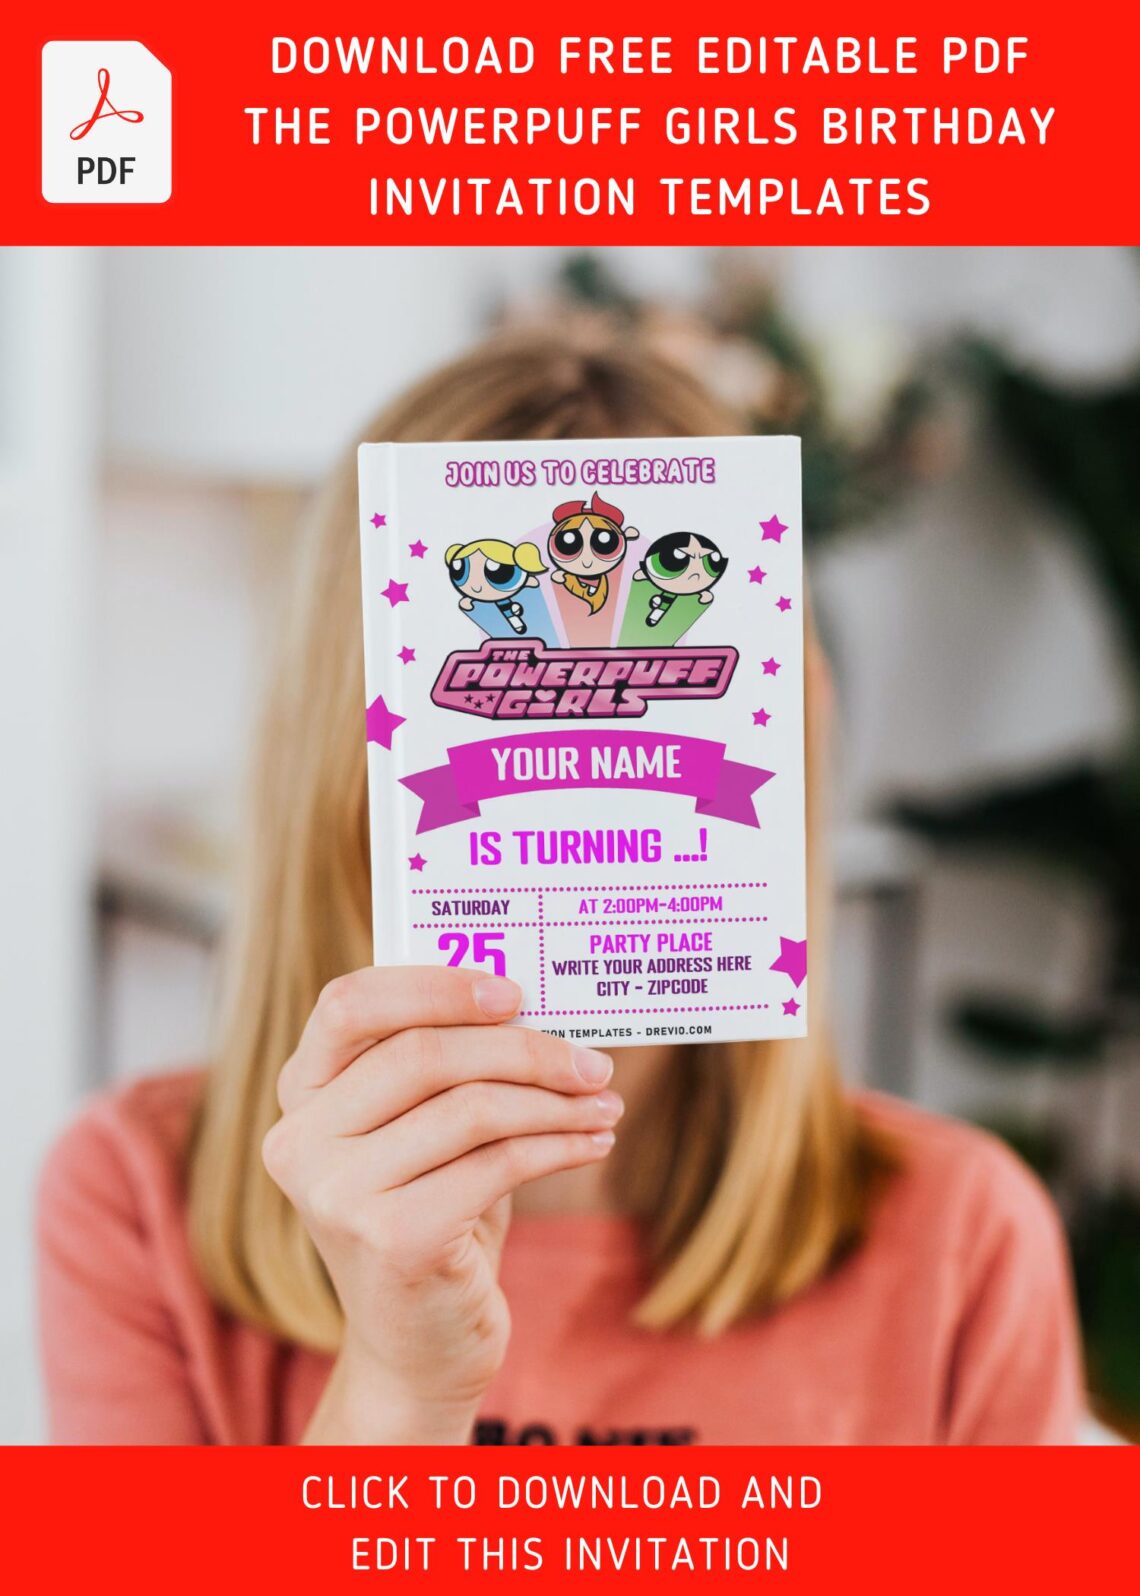 (Free Editable PDF) Powerpuff Girls Birthday Invitation Templates with adorable Buttercup